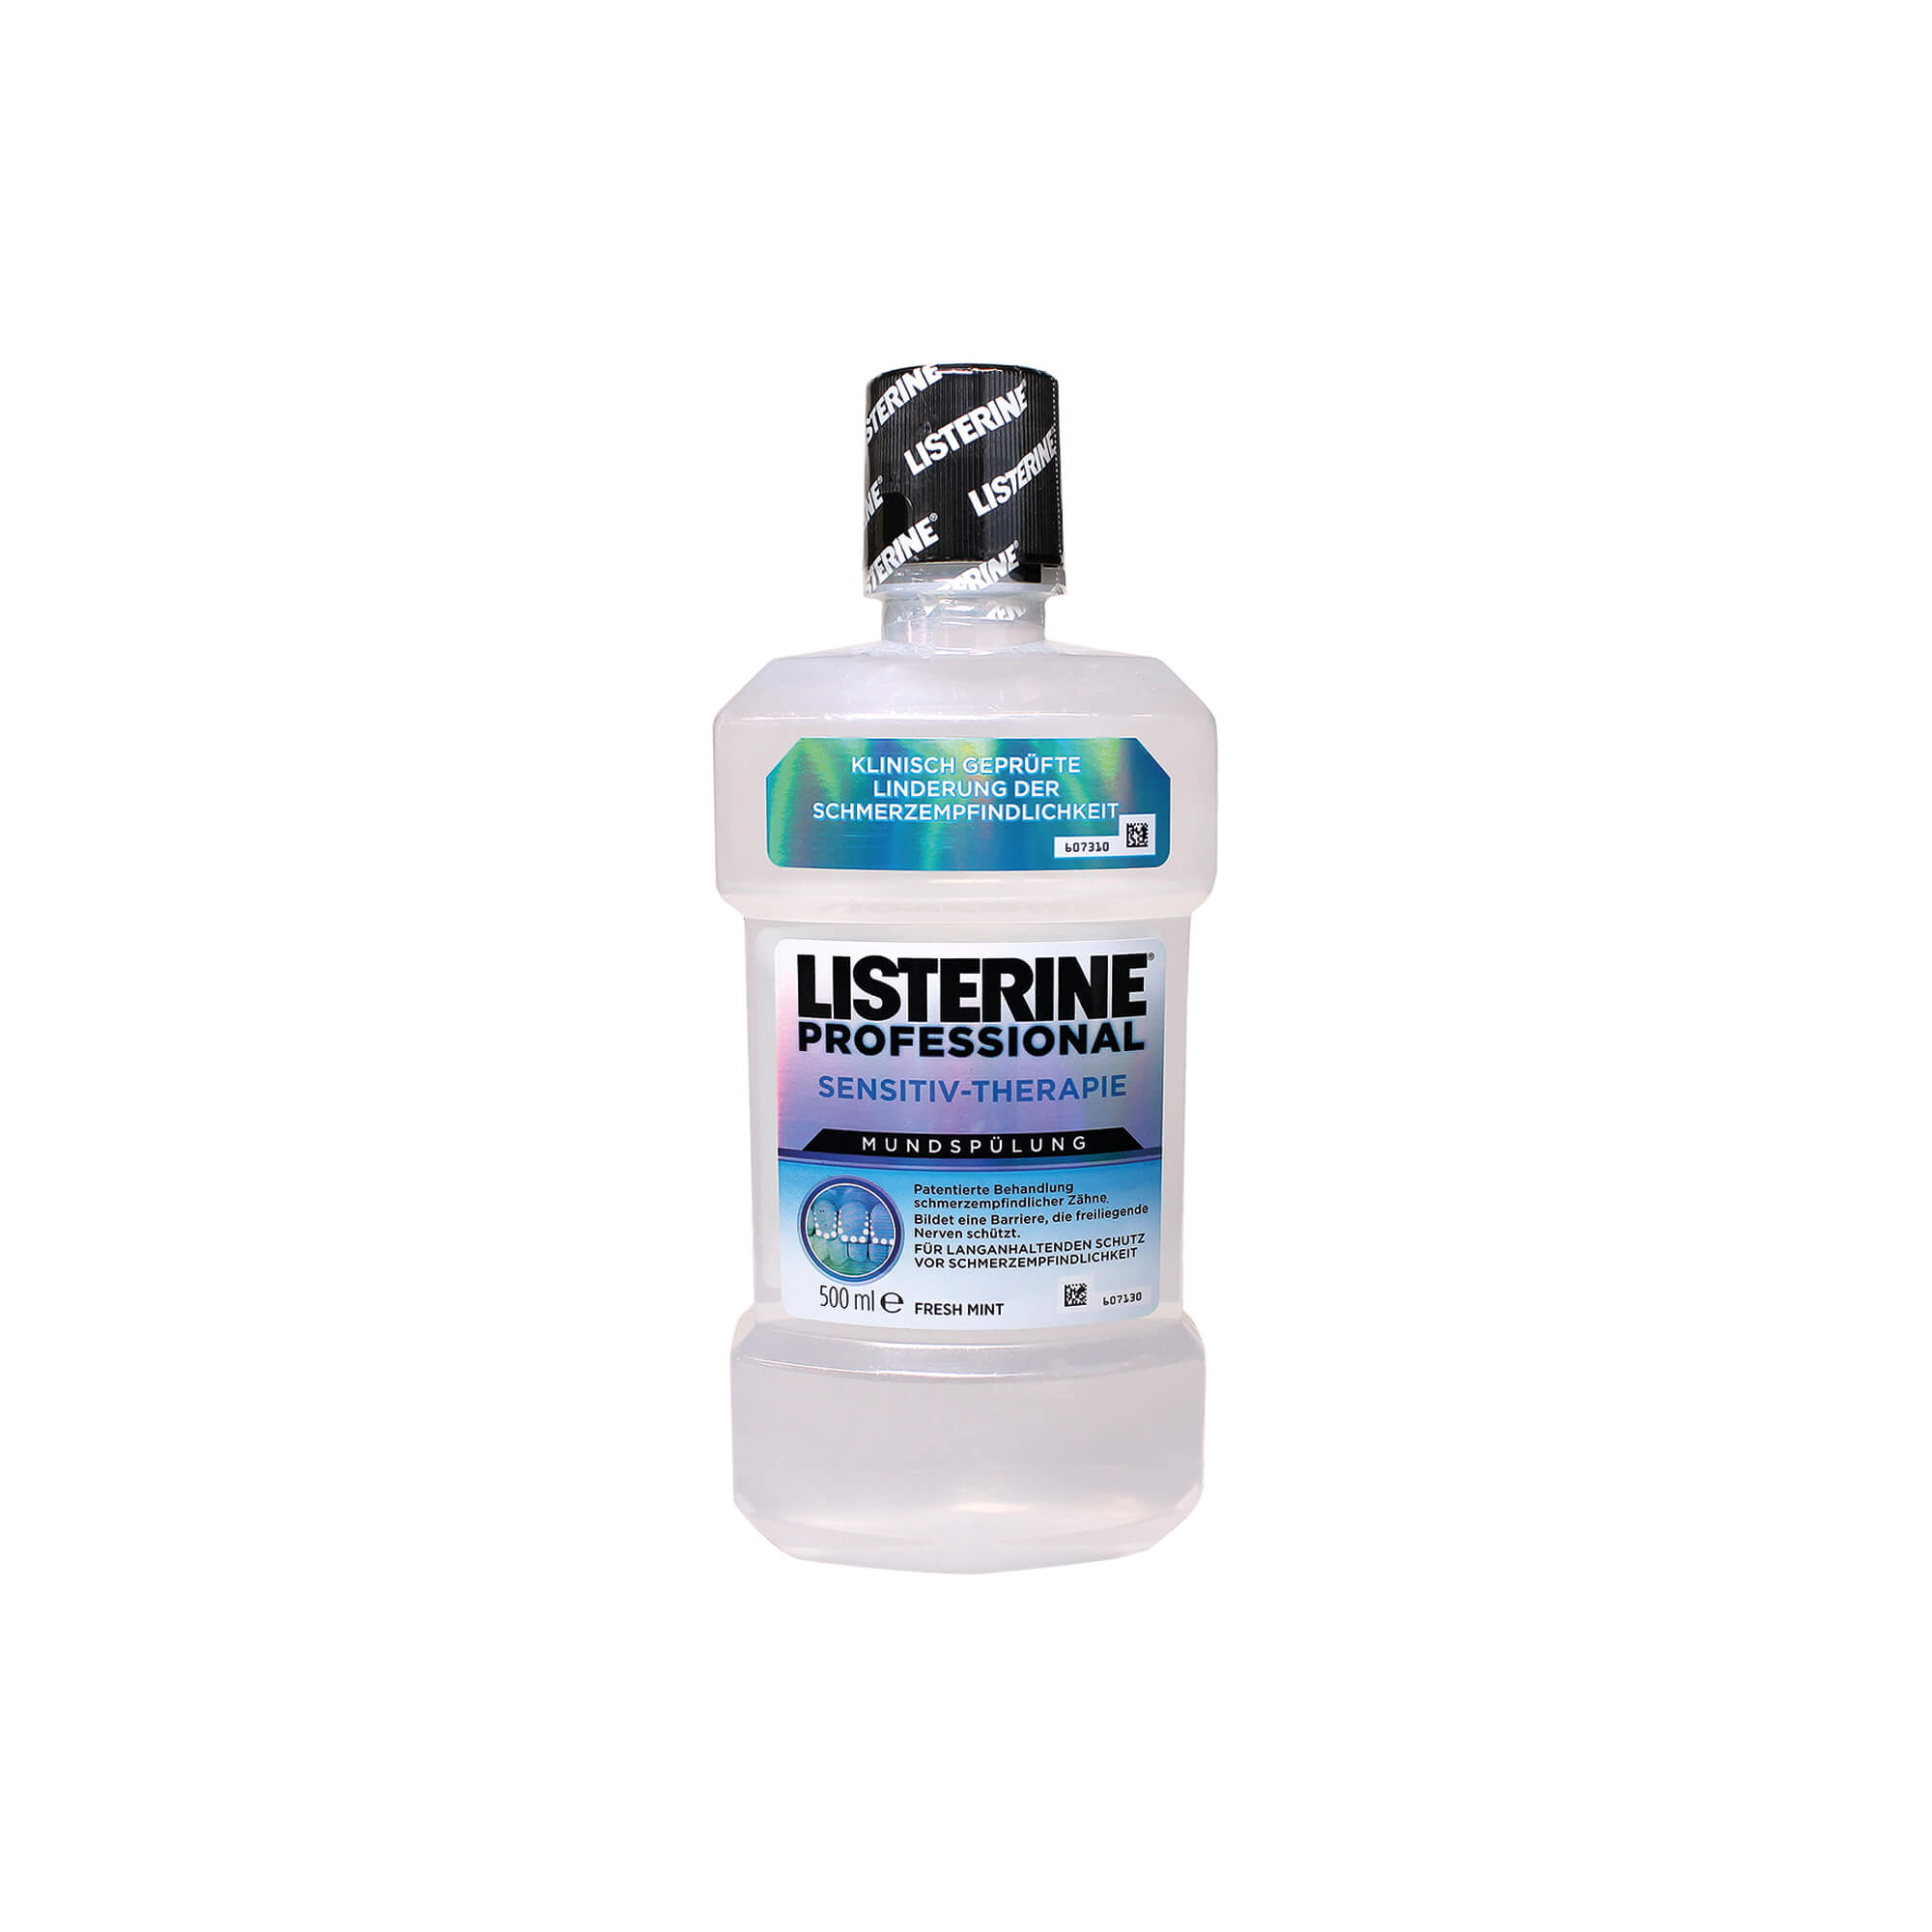 Listerine Professional Sensitiv-Therapie Mundspülung